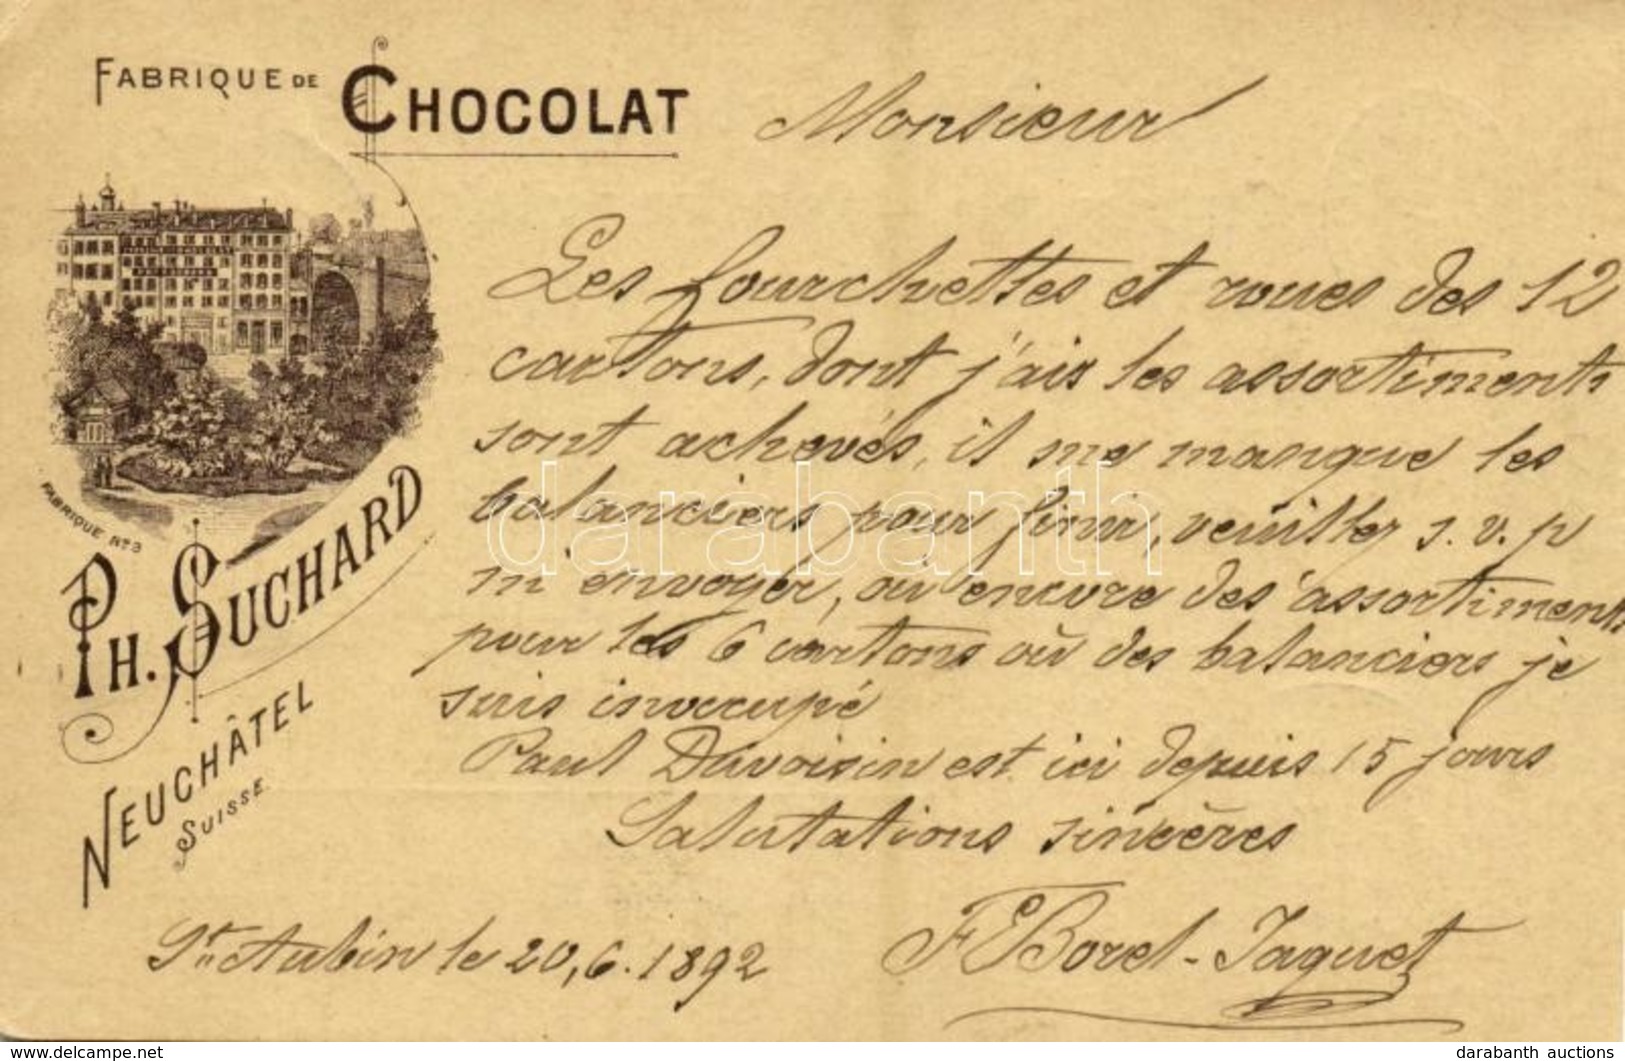 T2/T3 1892 (Vorläufer!) Fabrique De Chocolat Ph. Suchard (Neuchatel, Suisse) / Very Early Swiss Chocolate Factory Advert - Unclassified